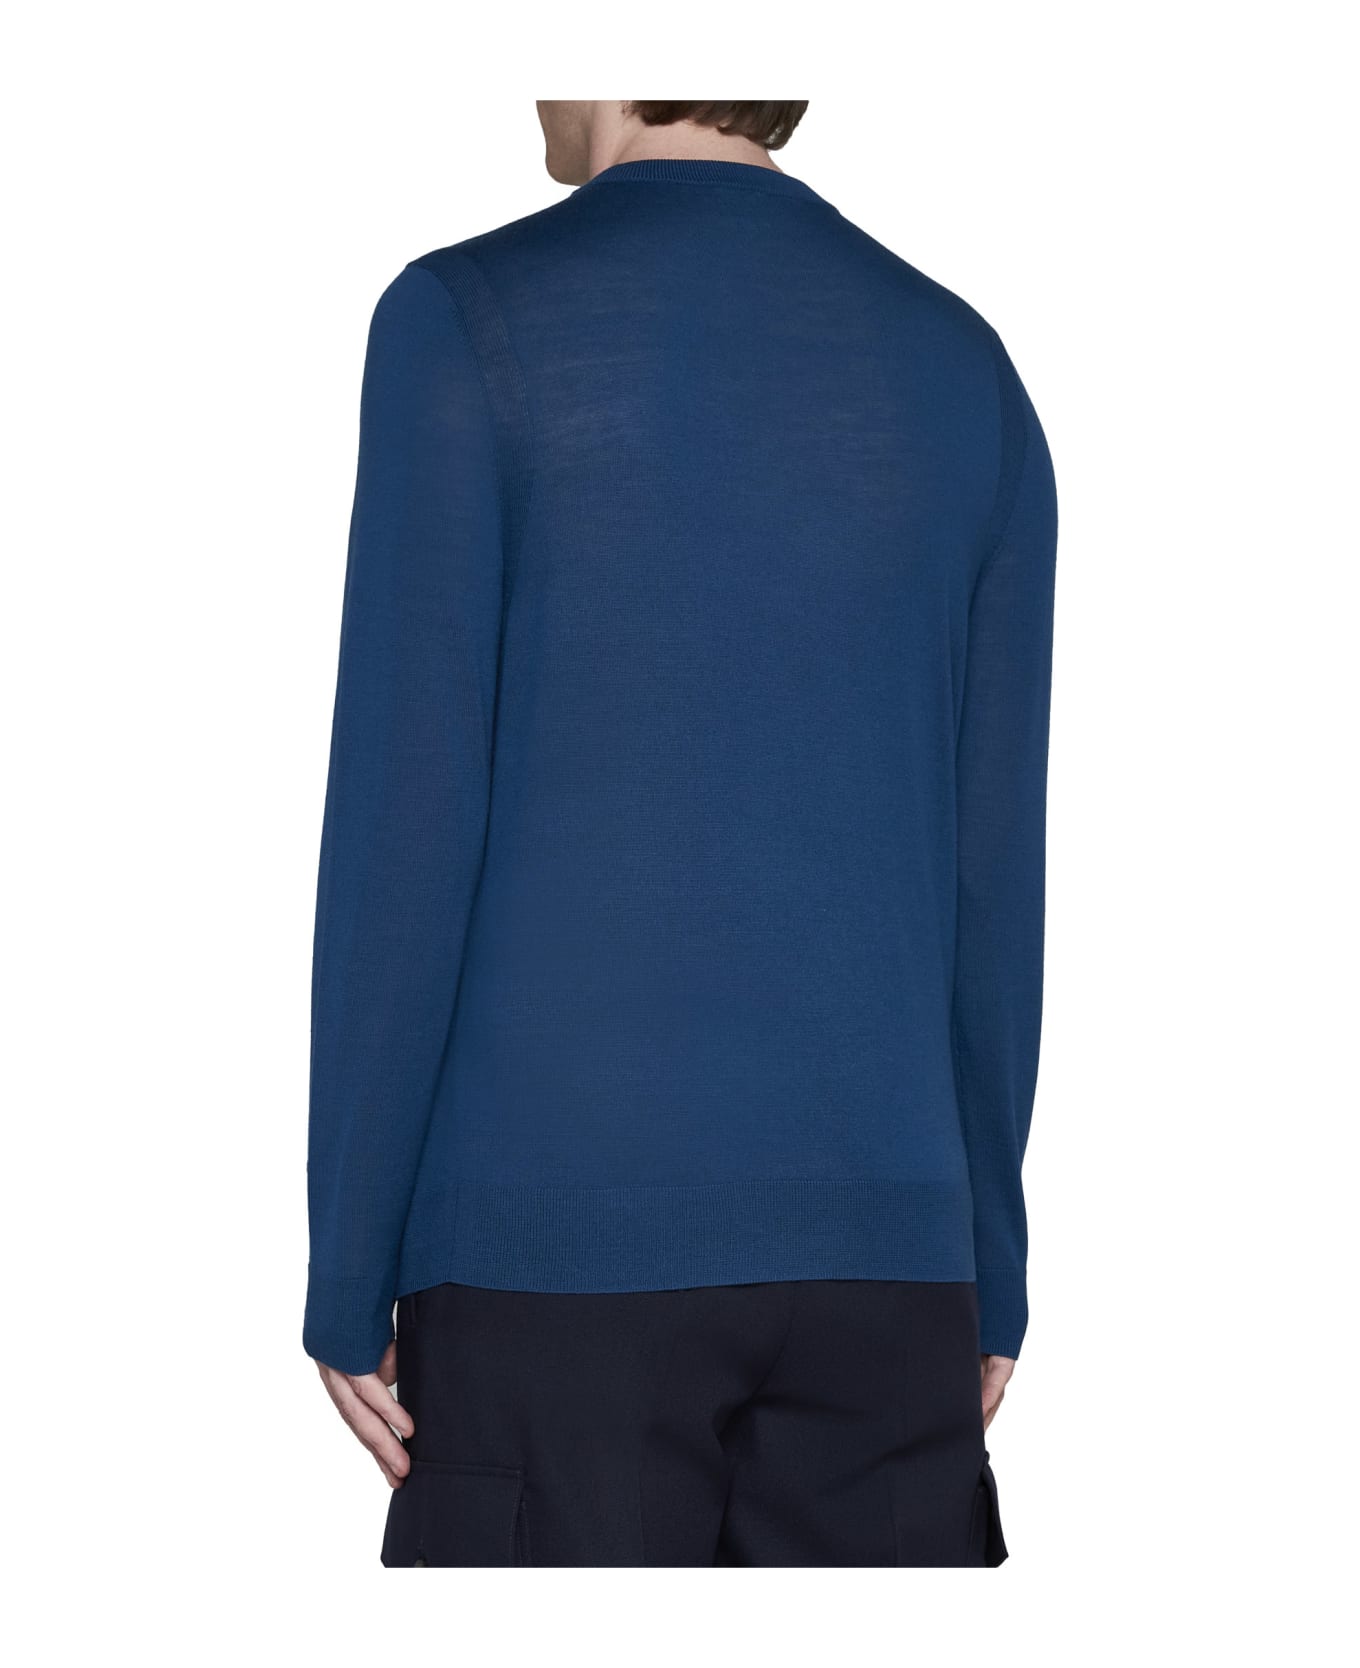 Paul Smith Sweater - Petrol blue ニットウェア